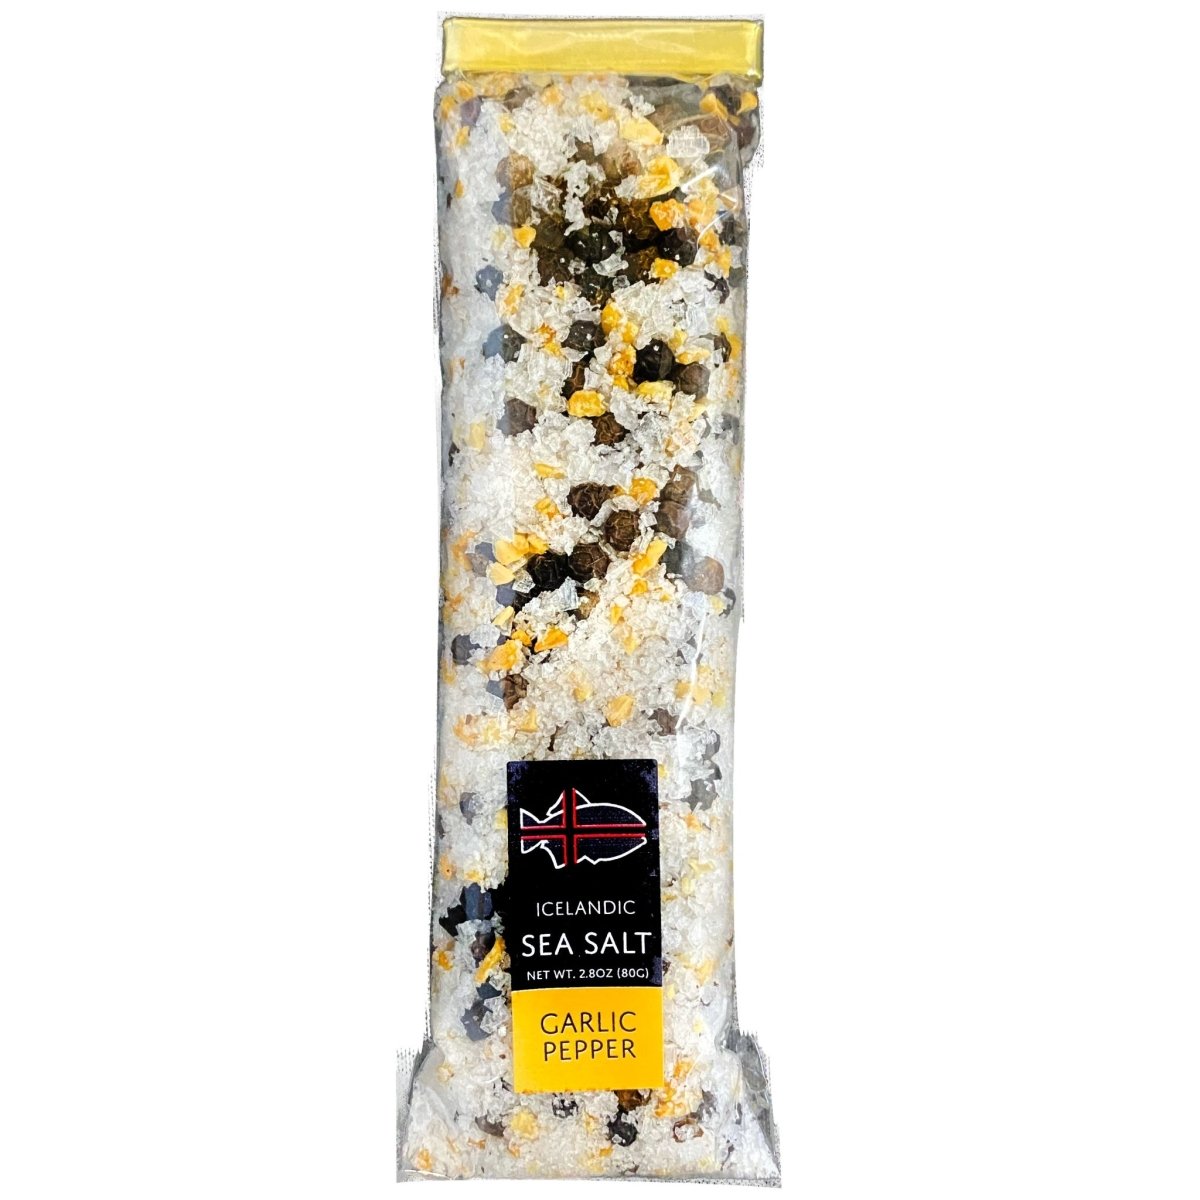 Garlic Pepper - Icelandic Sea Salt - Nordic Catch